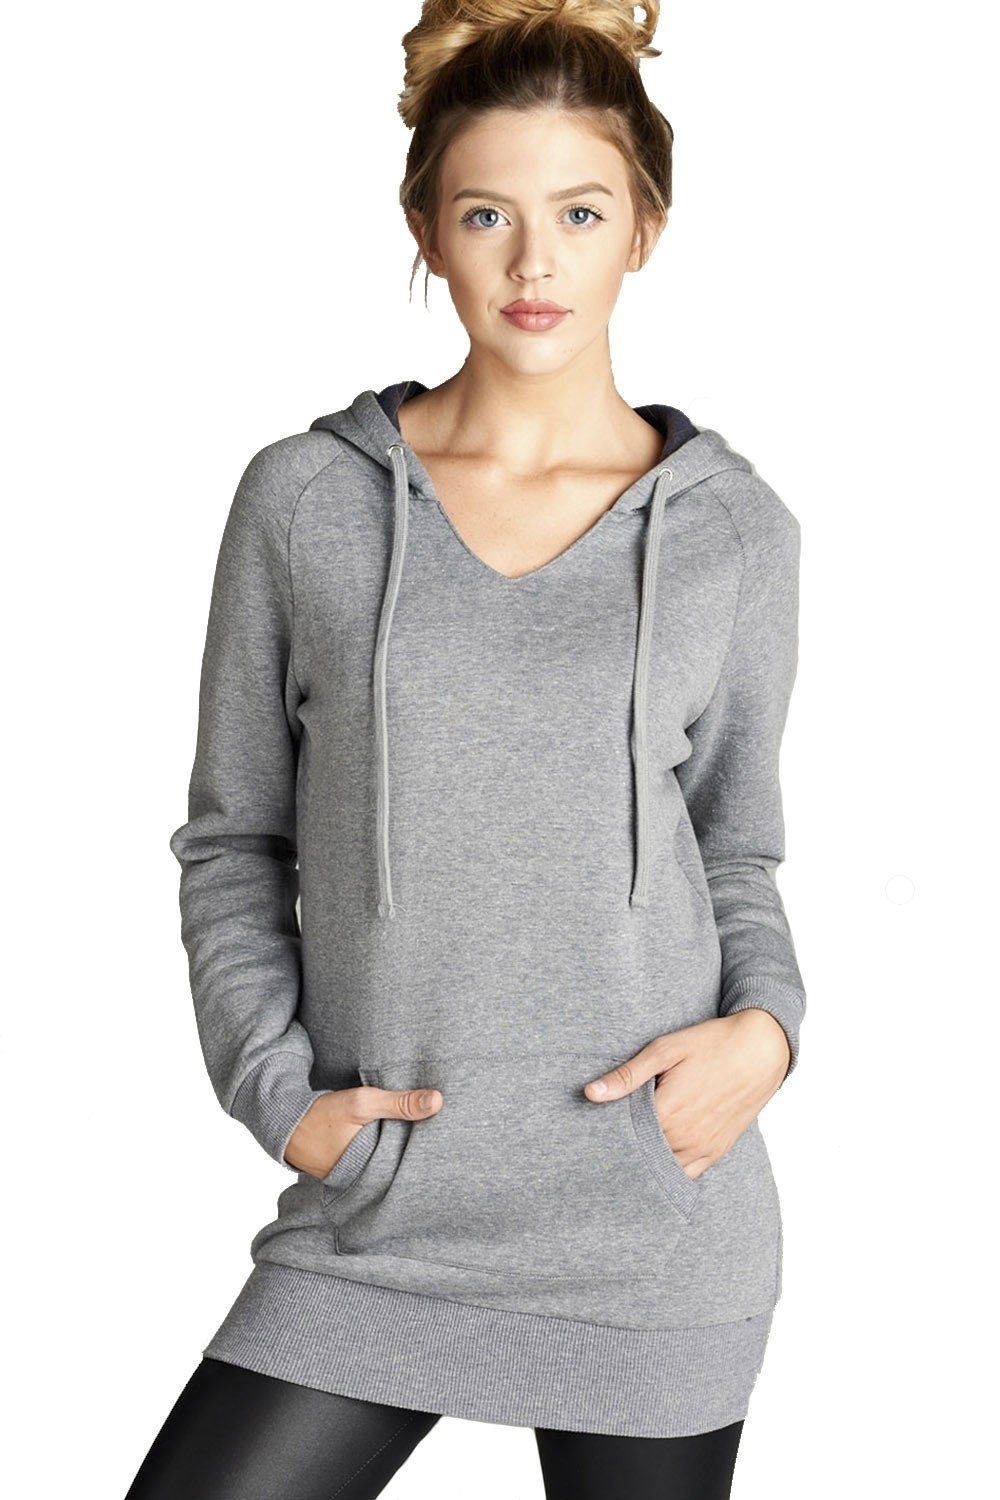 Raglan Long Sleeve Pullover Hoodie Sweatshirt in Heather Grey - Medium, Heather Grey